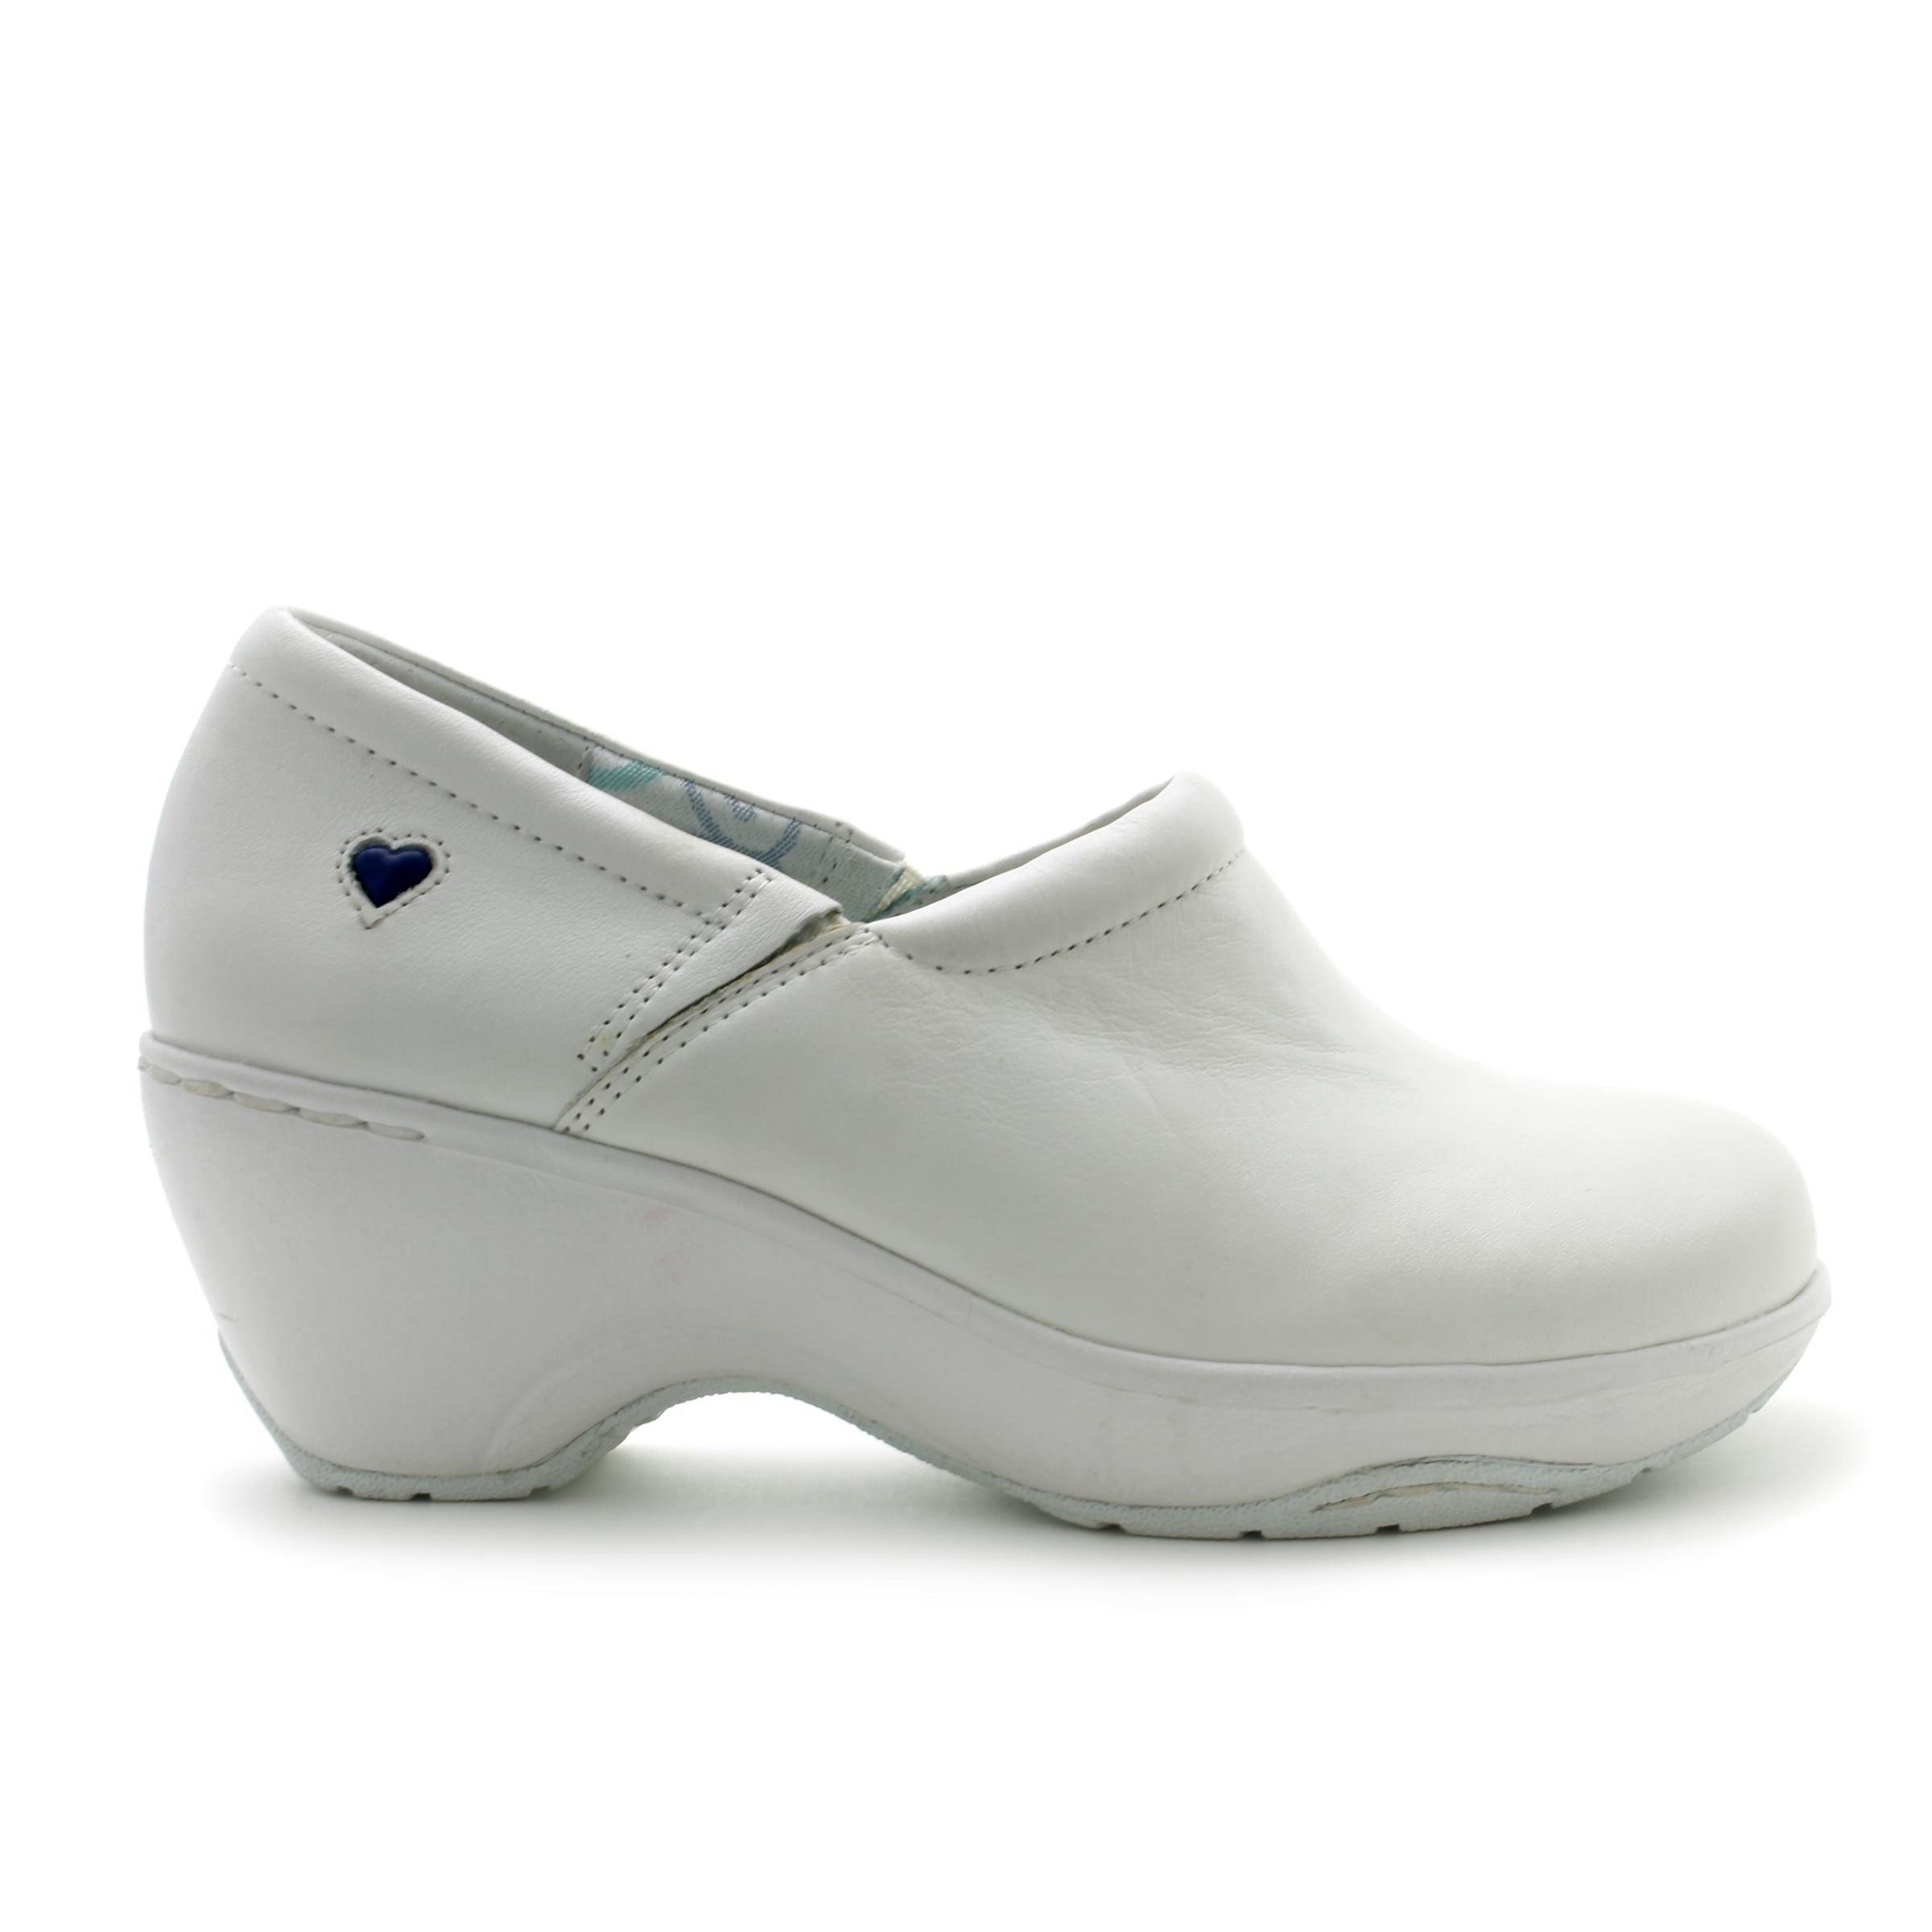 Nurse Mates Women's Bryar Shoe in White